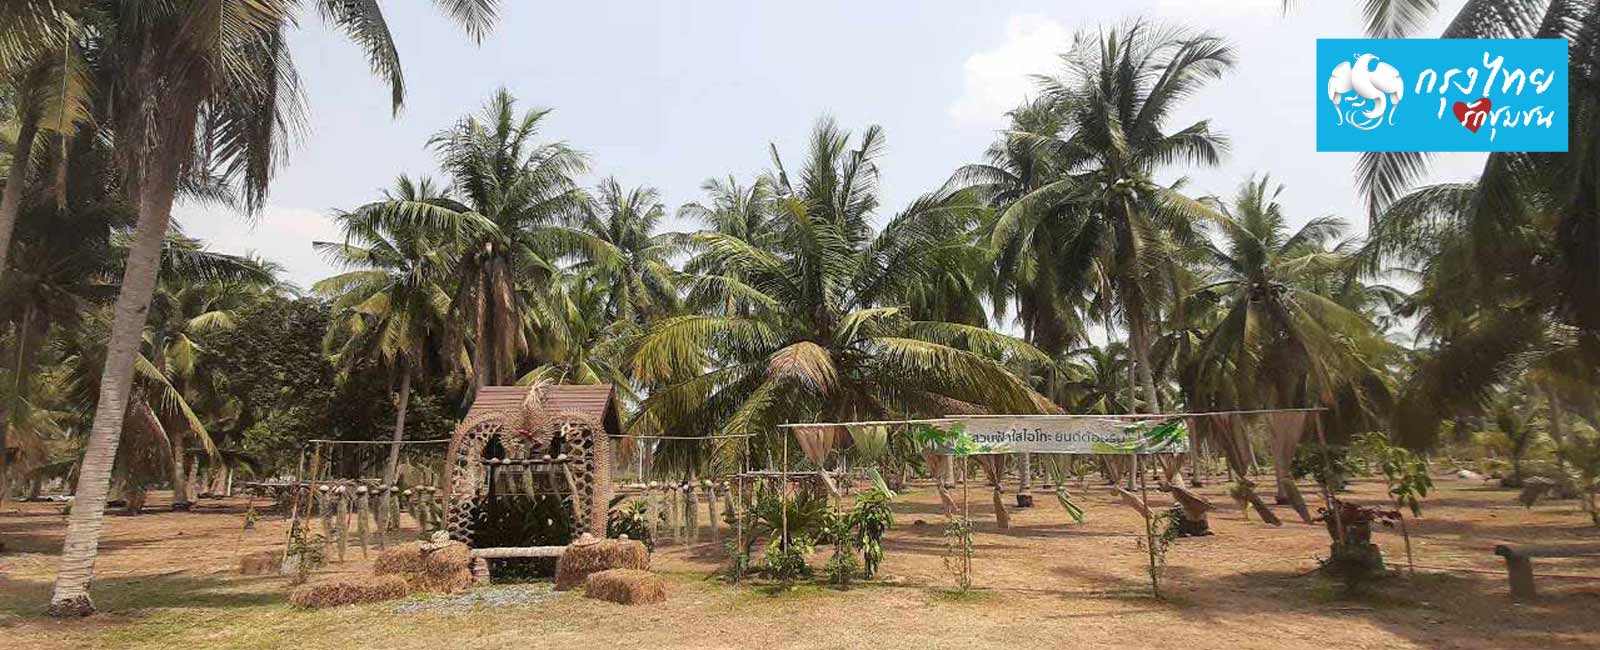 Takian Tia Community